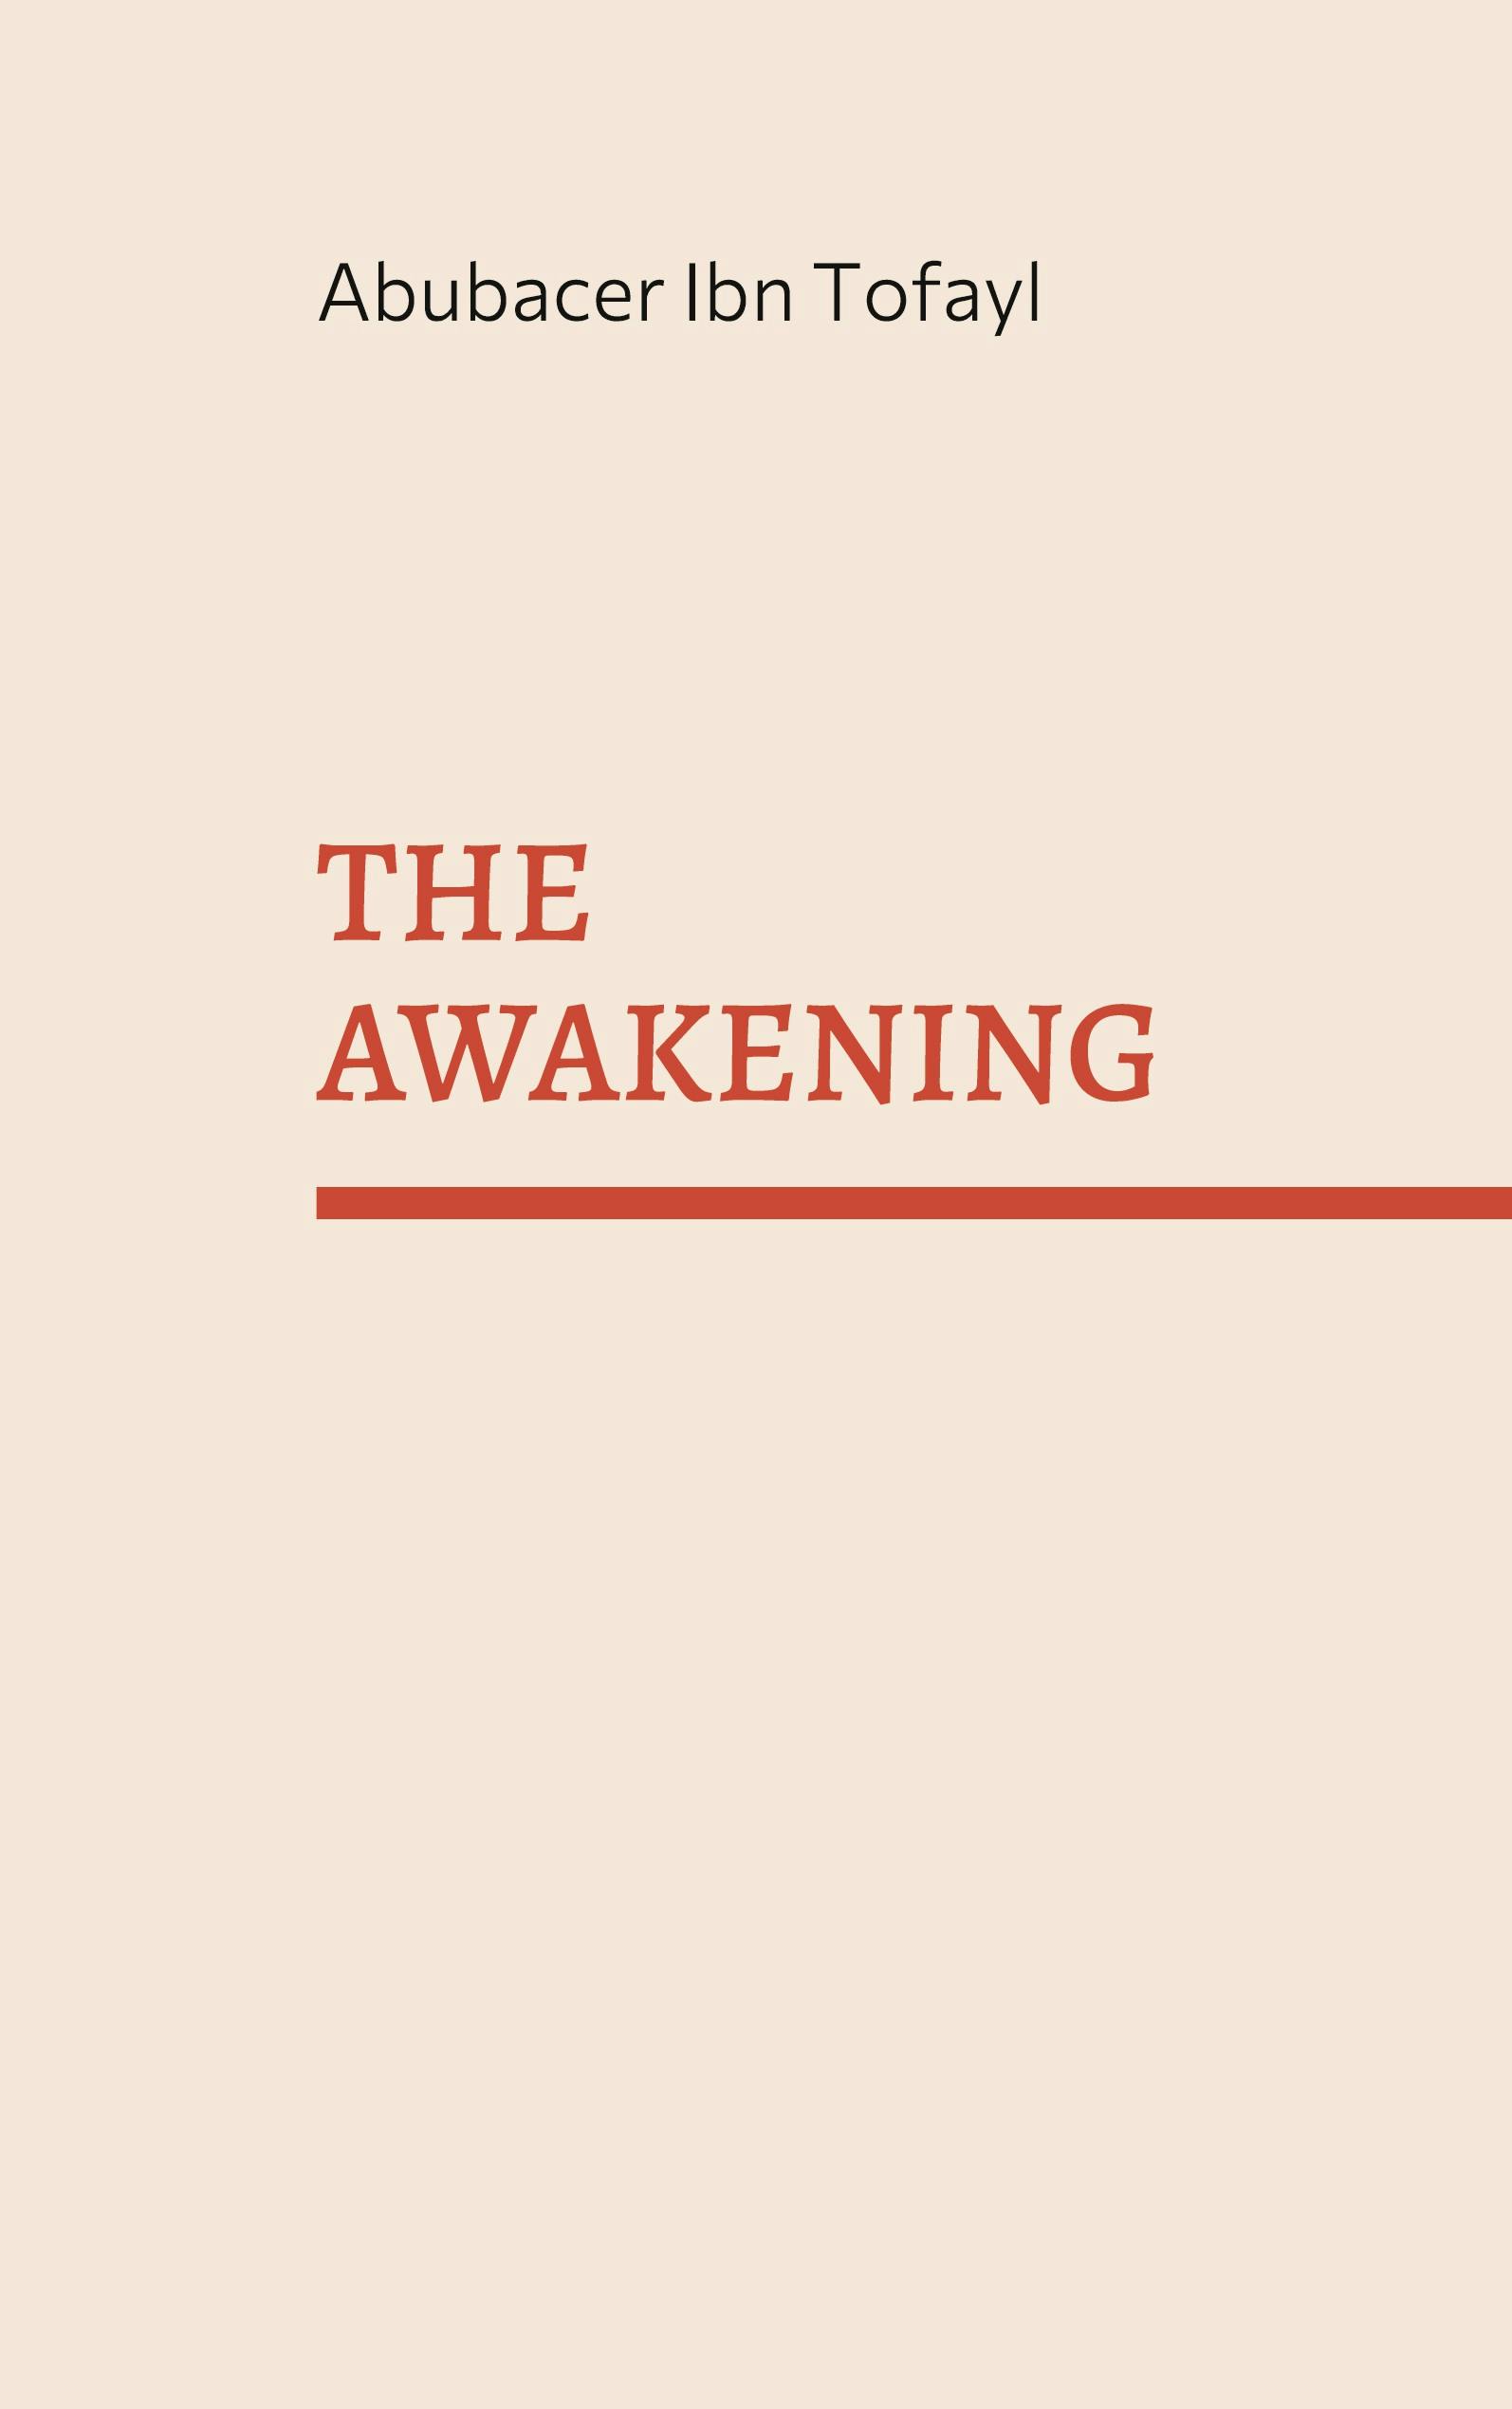 THE AWAKENING - Abubacer Ibn Tofayl